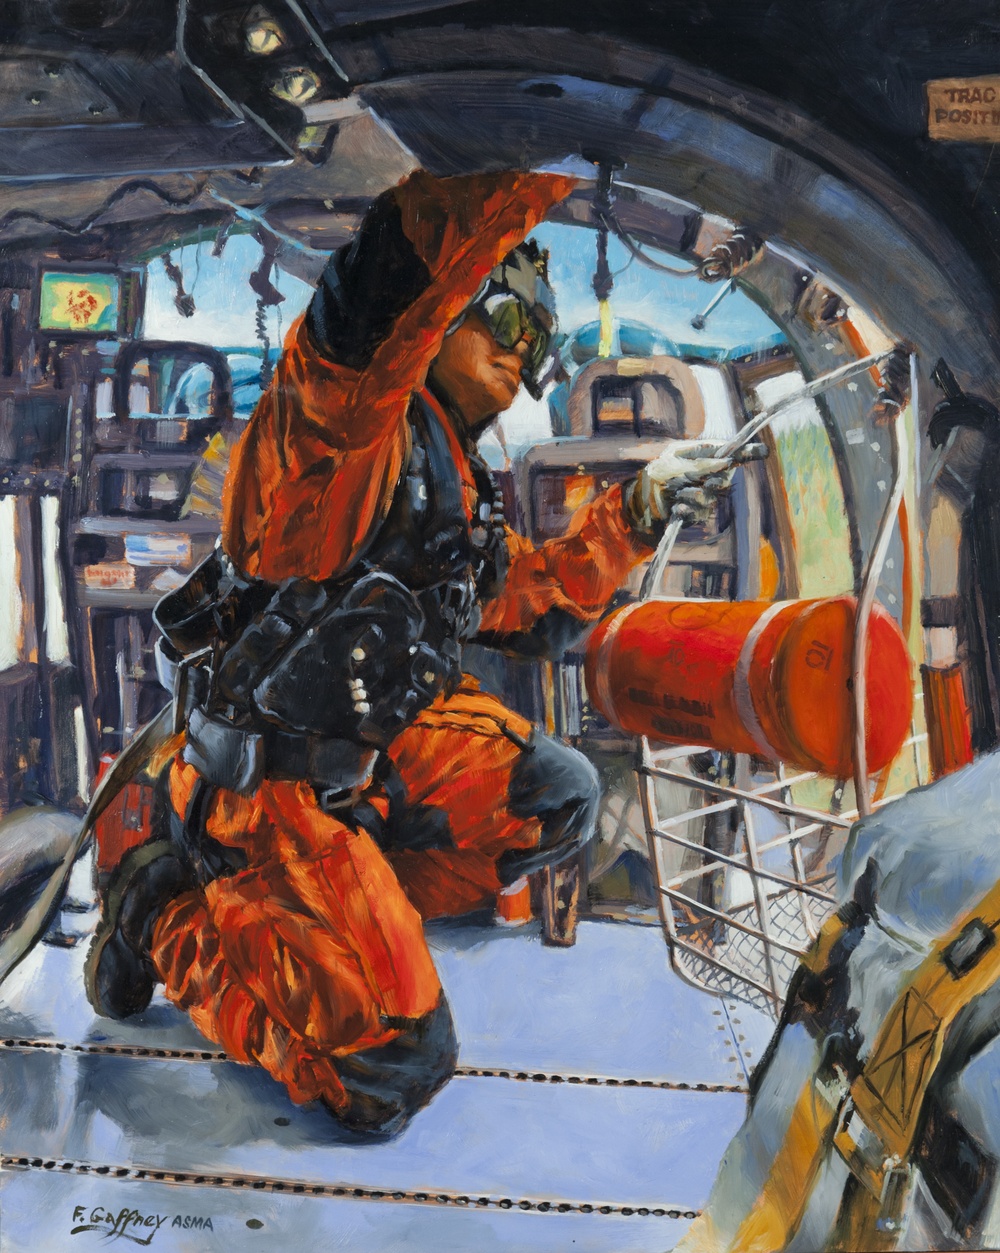 US Coast Guard Art Program 2015 Collection, 'Rescue Basket Ready'